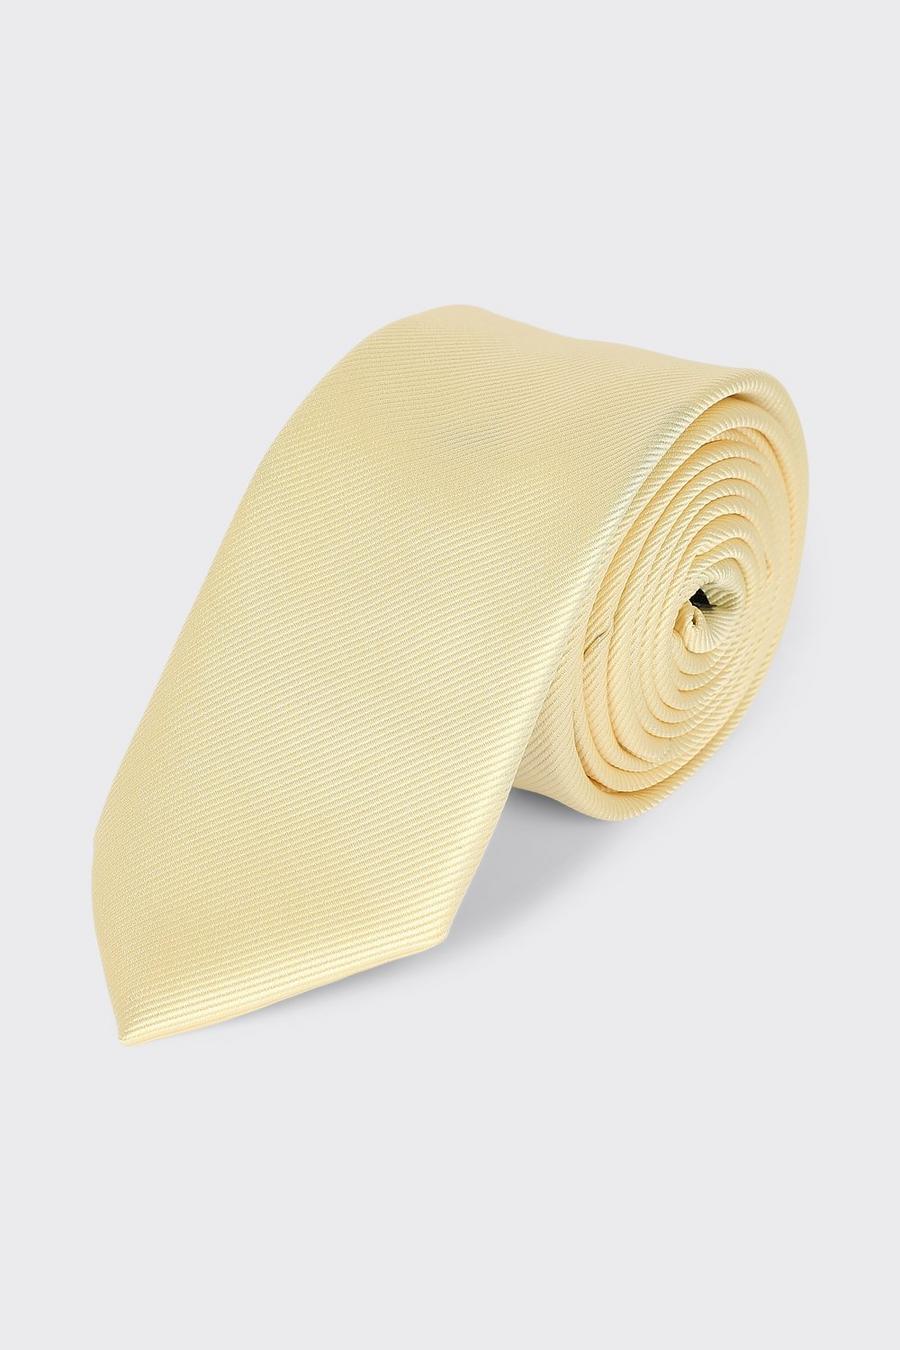 Slim Yellow Tie